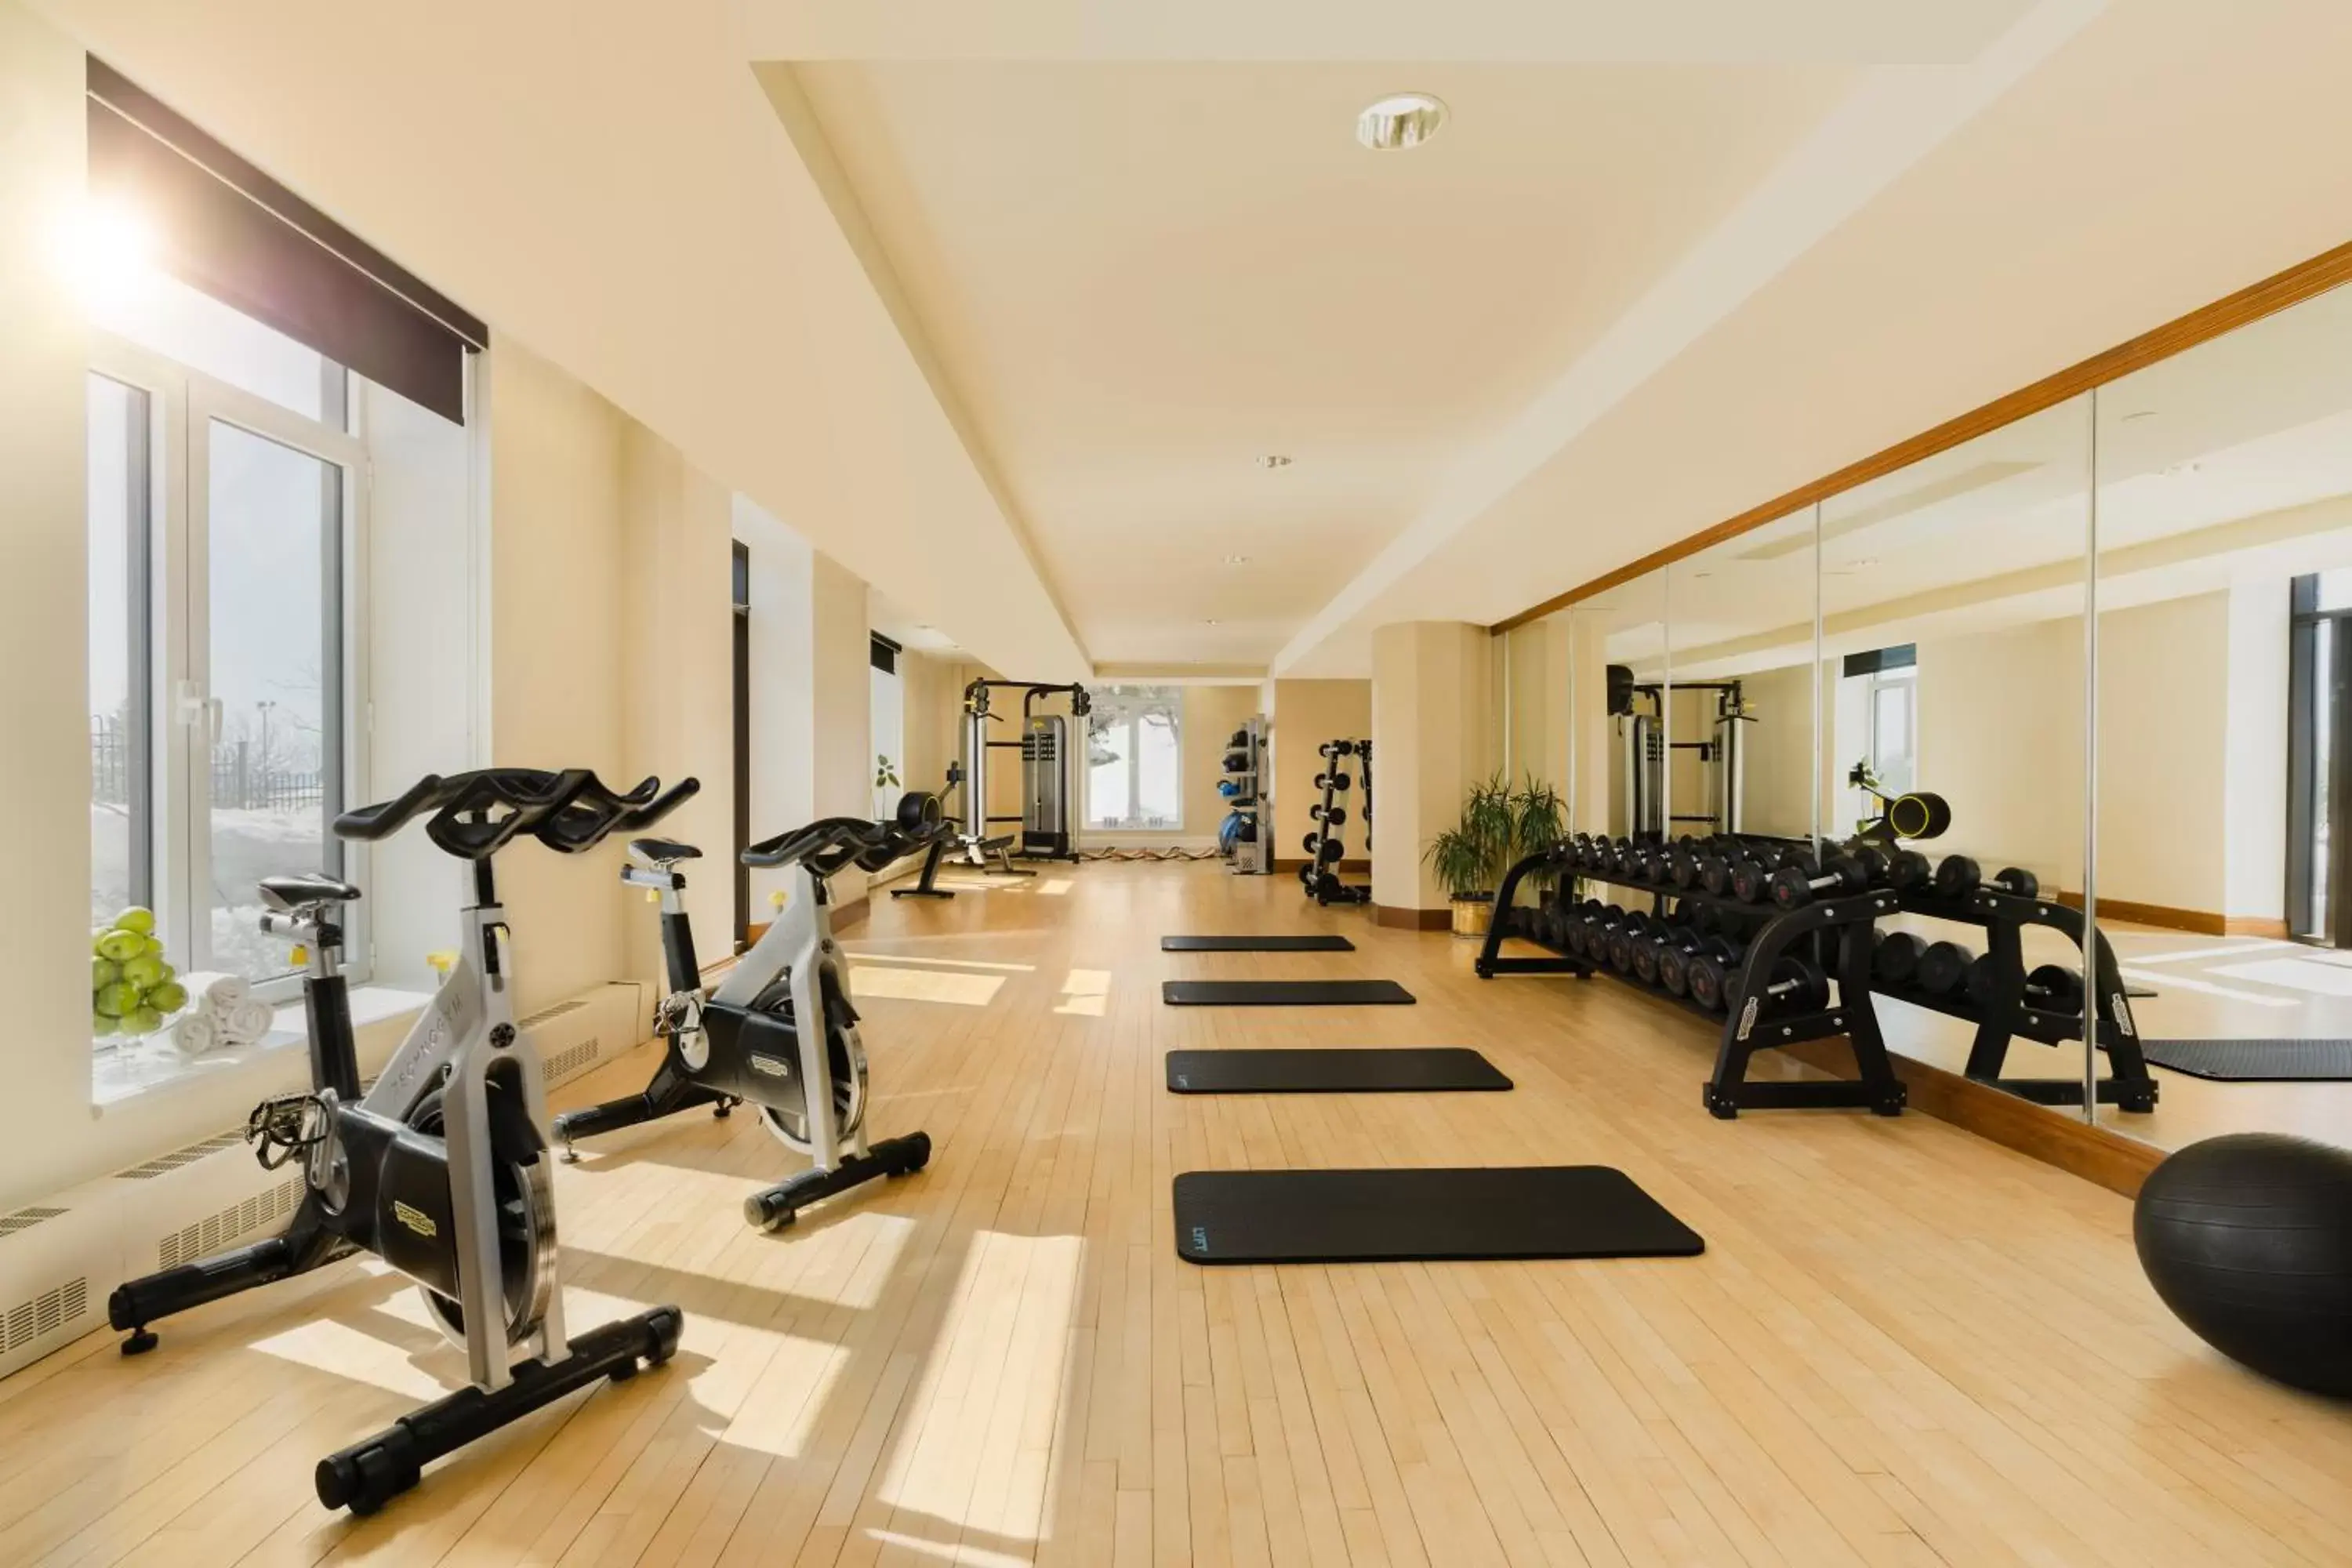 Fitness centre/facilities, Fitness Center/Facilities in Fairmont Le Manoir Richelieu